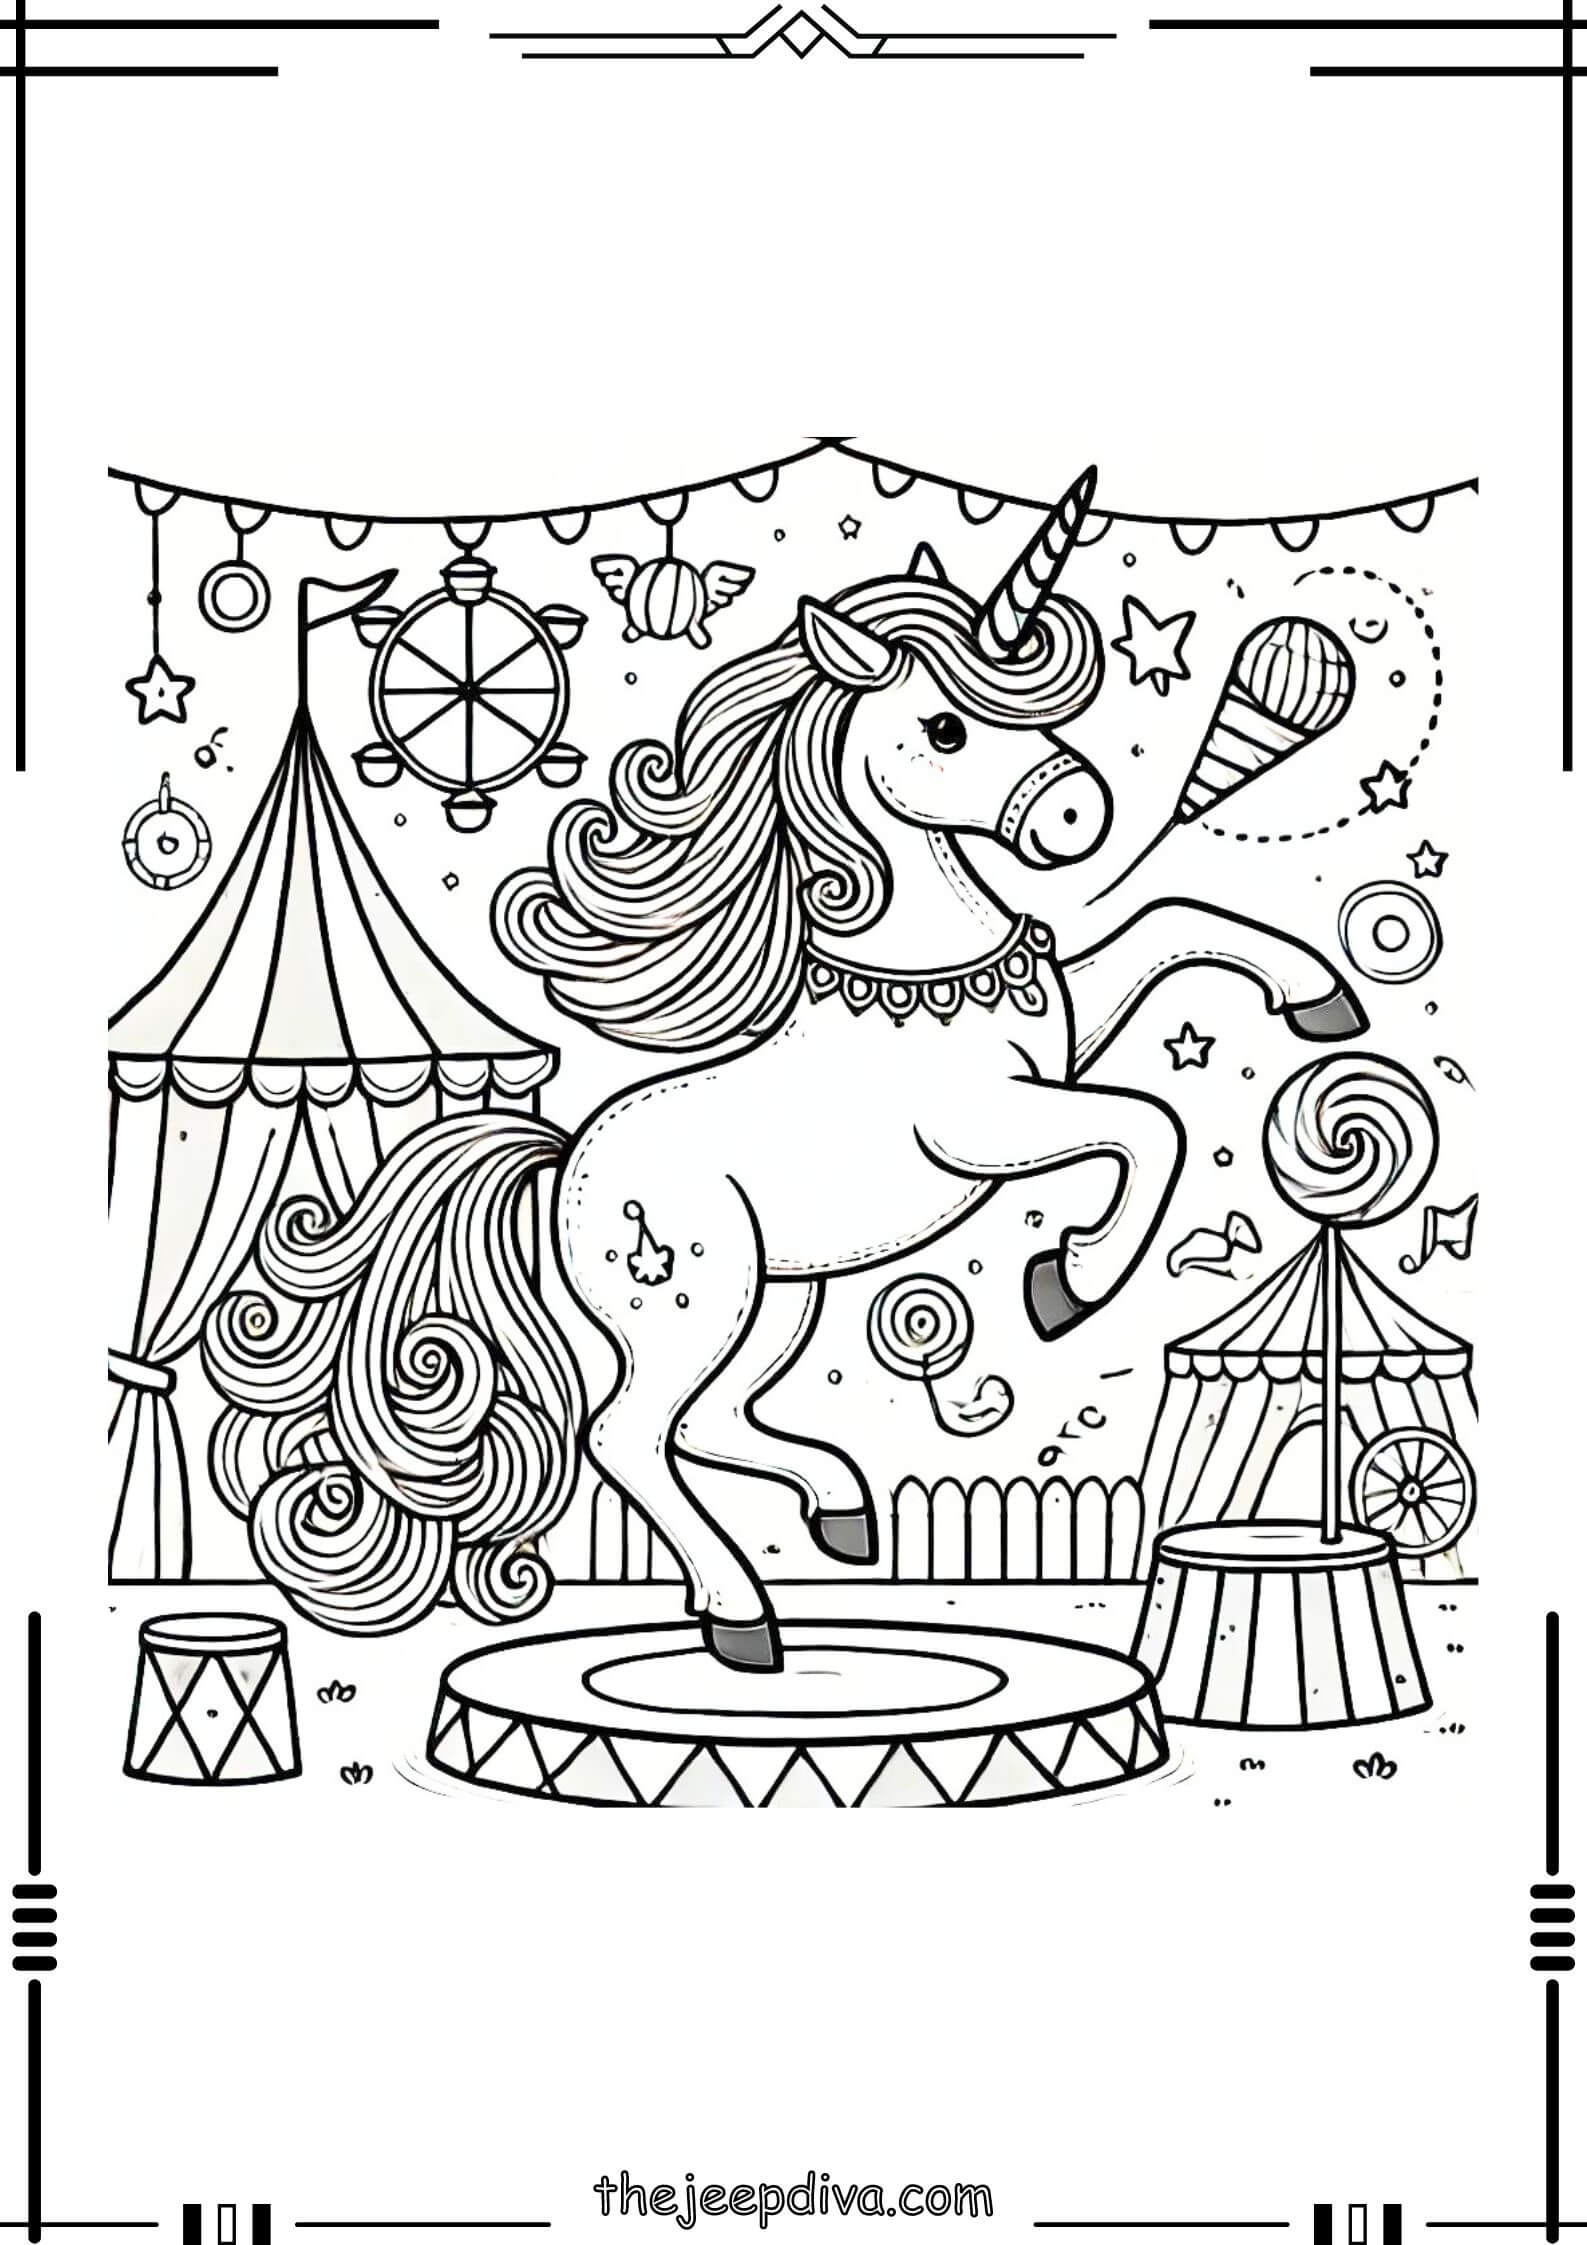 unicorn-coloring-page-hard-14